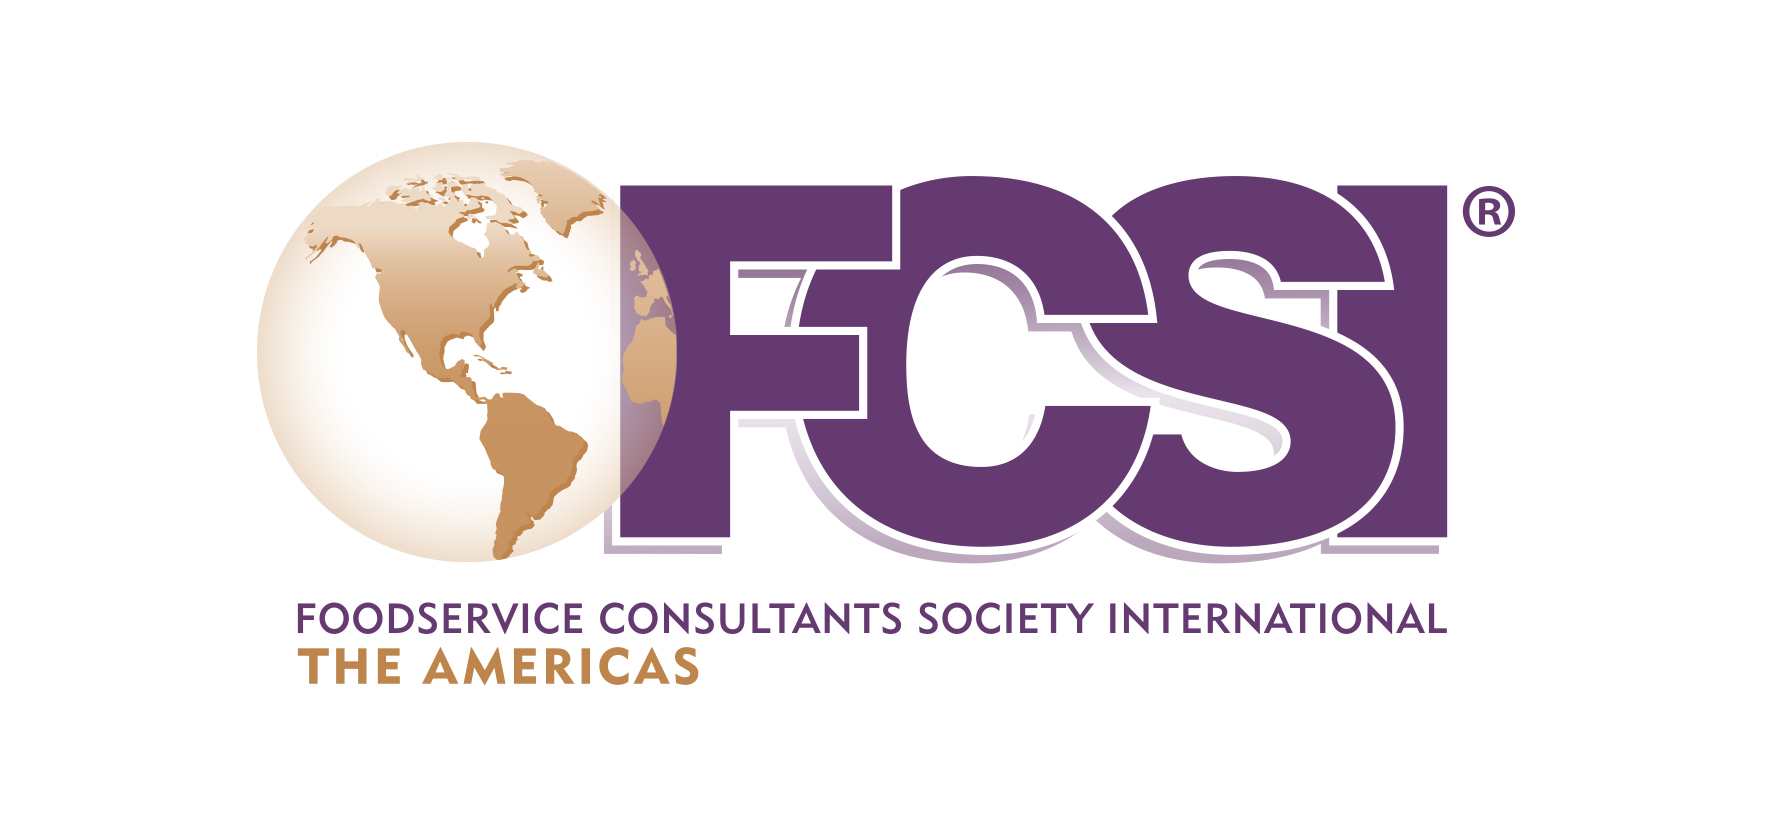 FCSI-The Americas-2c-2009cs3-out